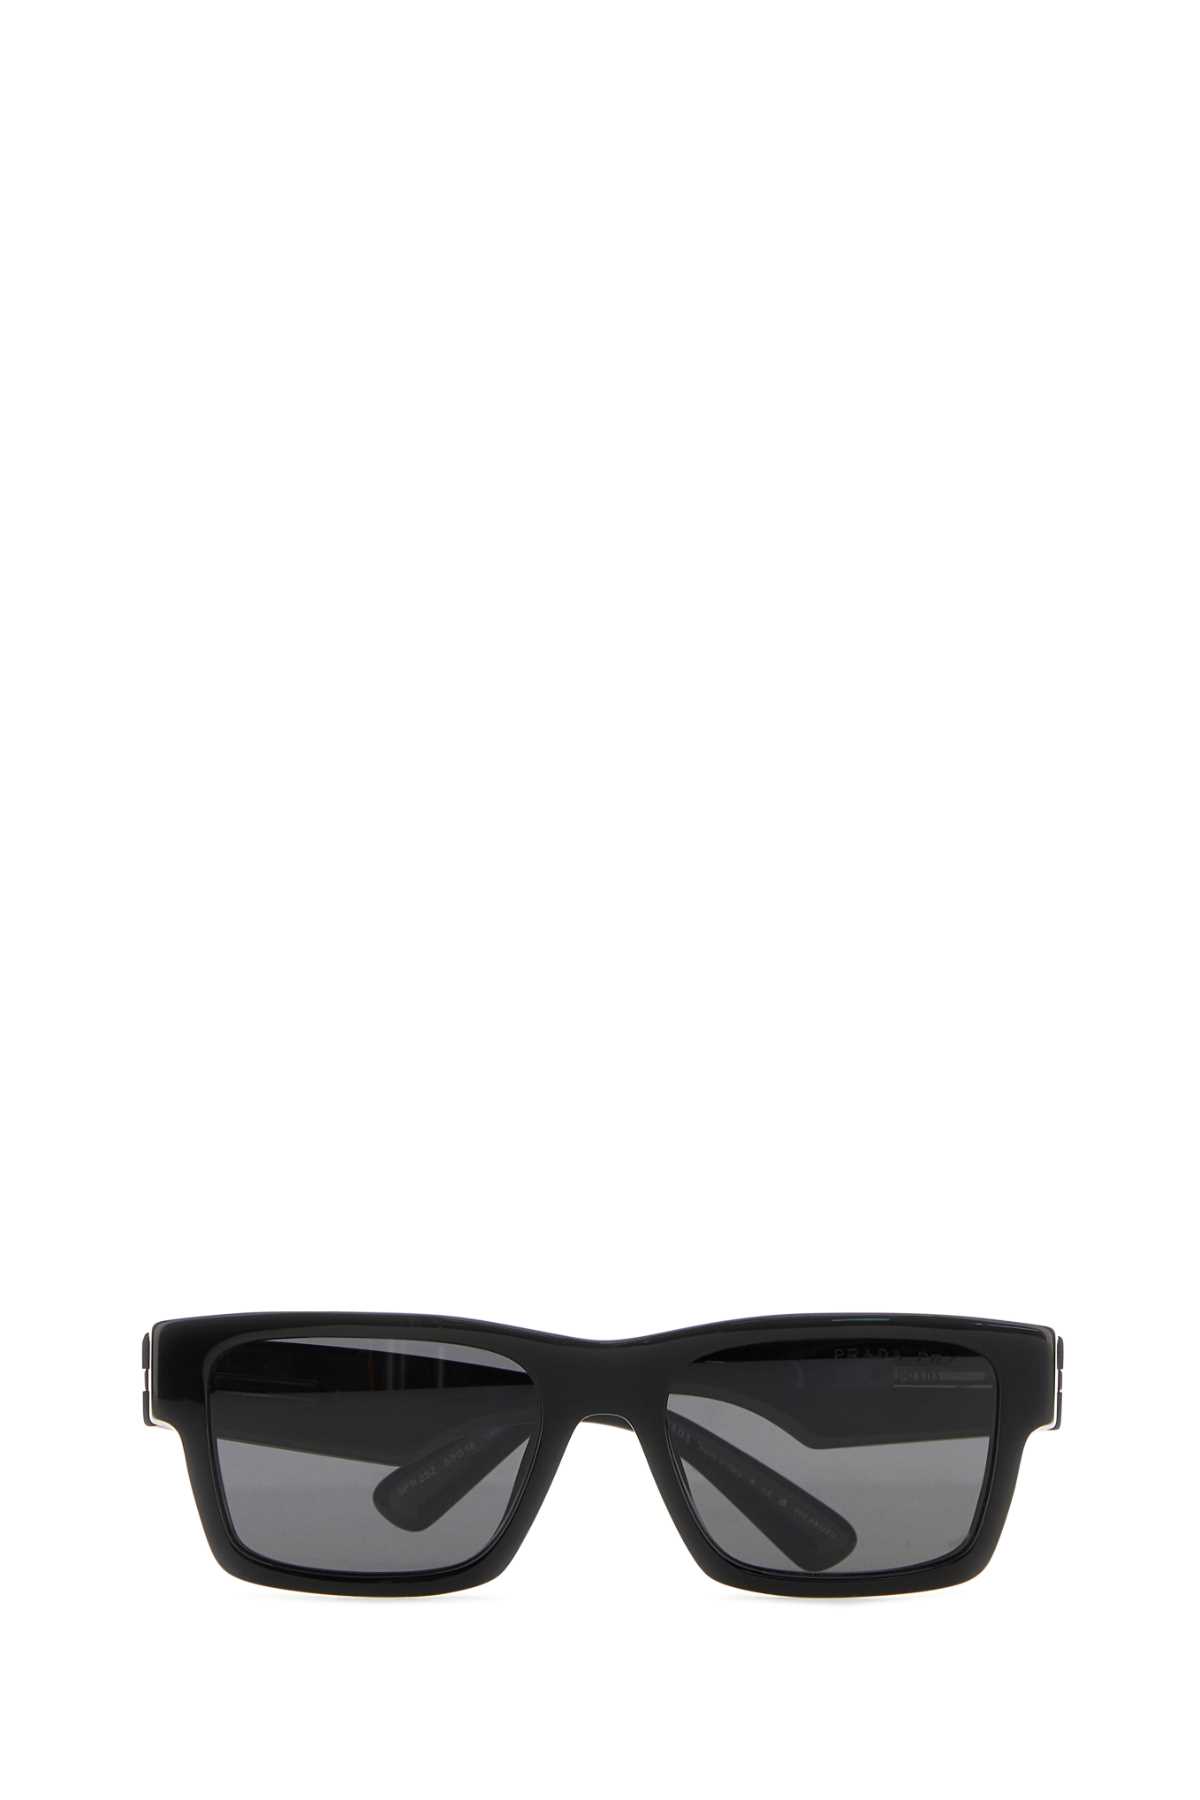 Shop Prada Black Acetate Sunglasses In Lensesardesia